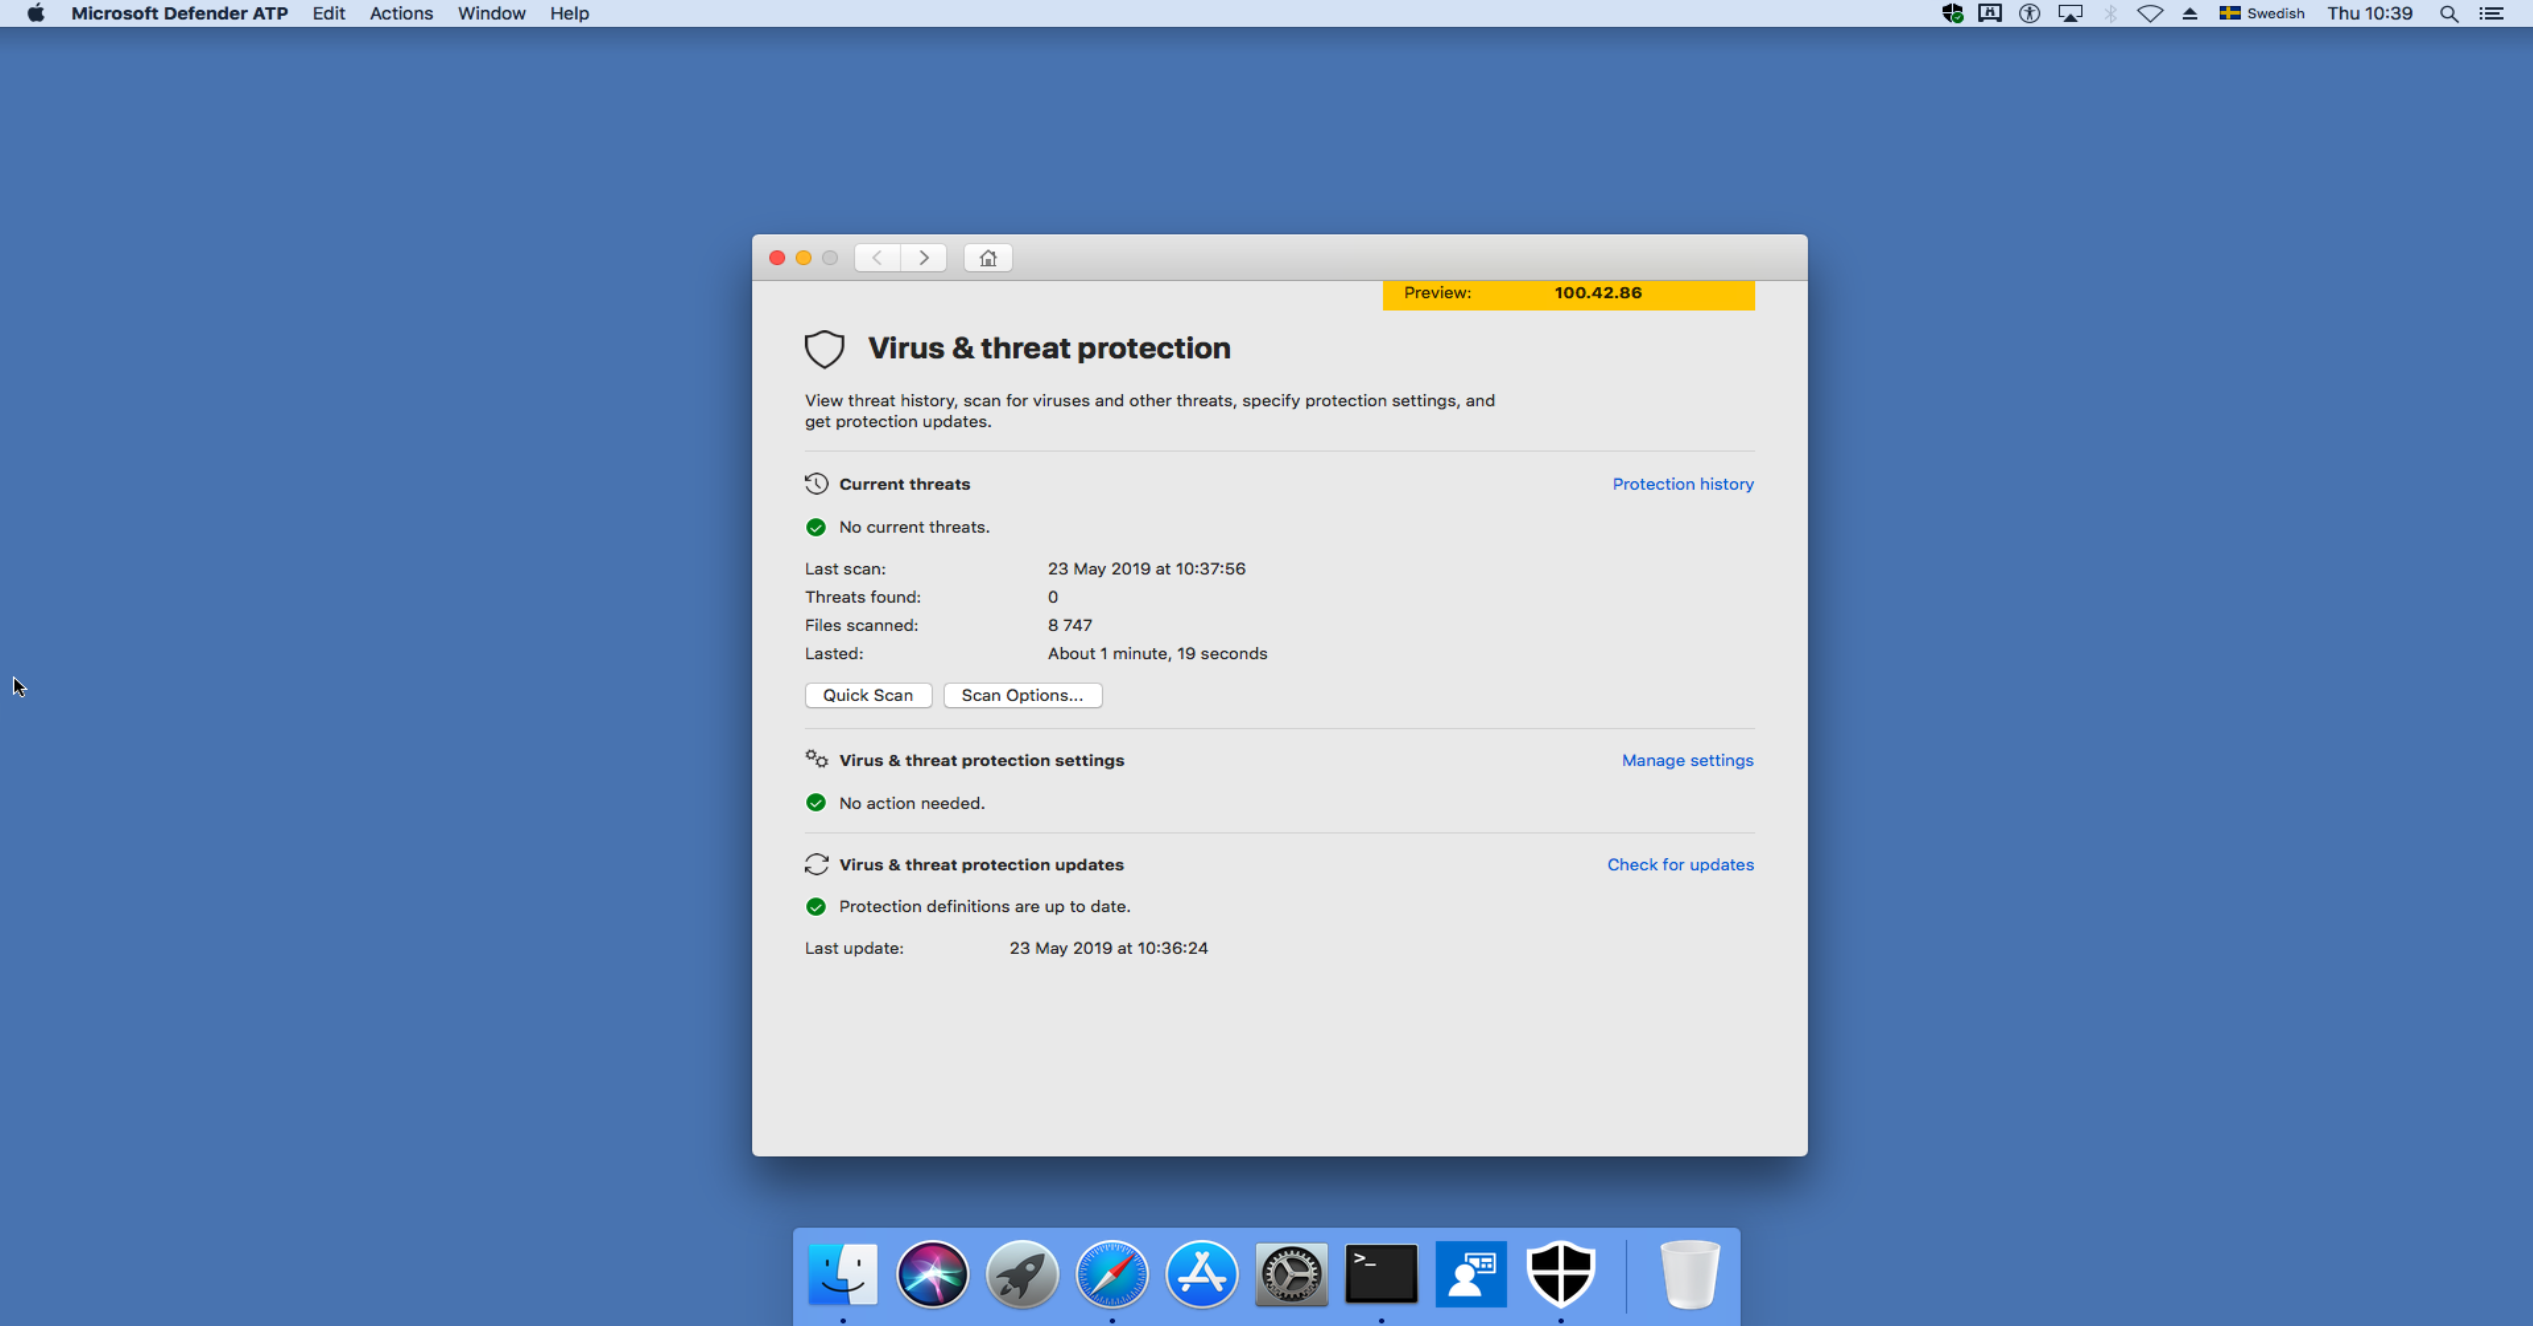 citrix workspace download for mac